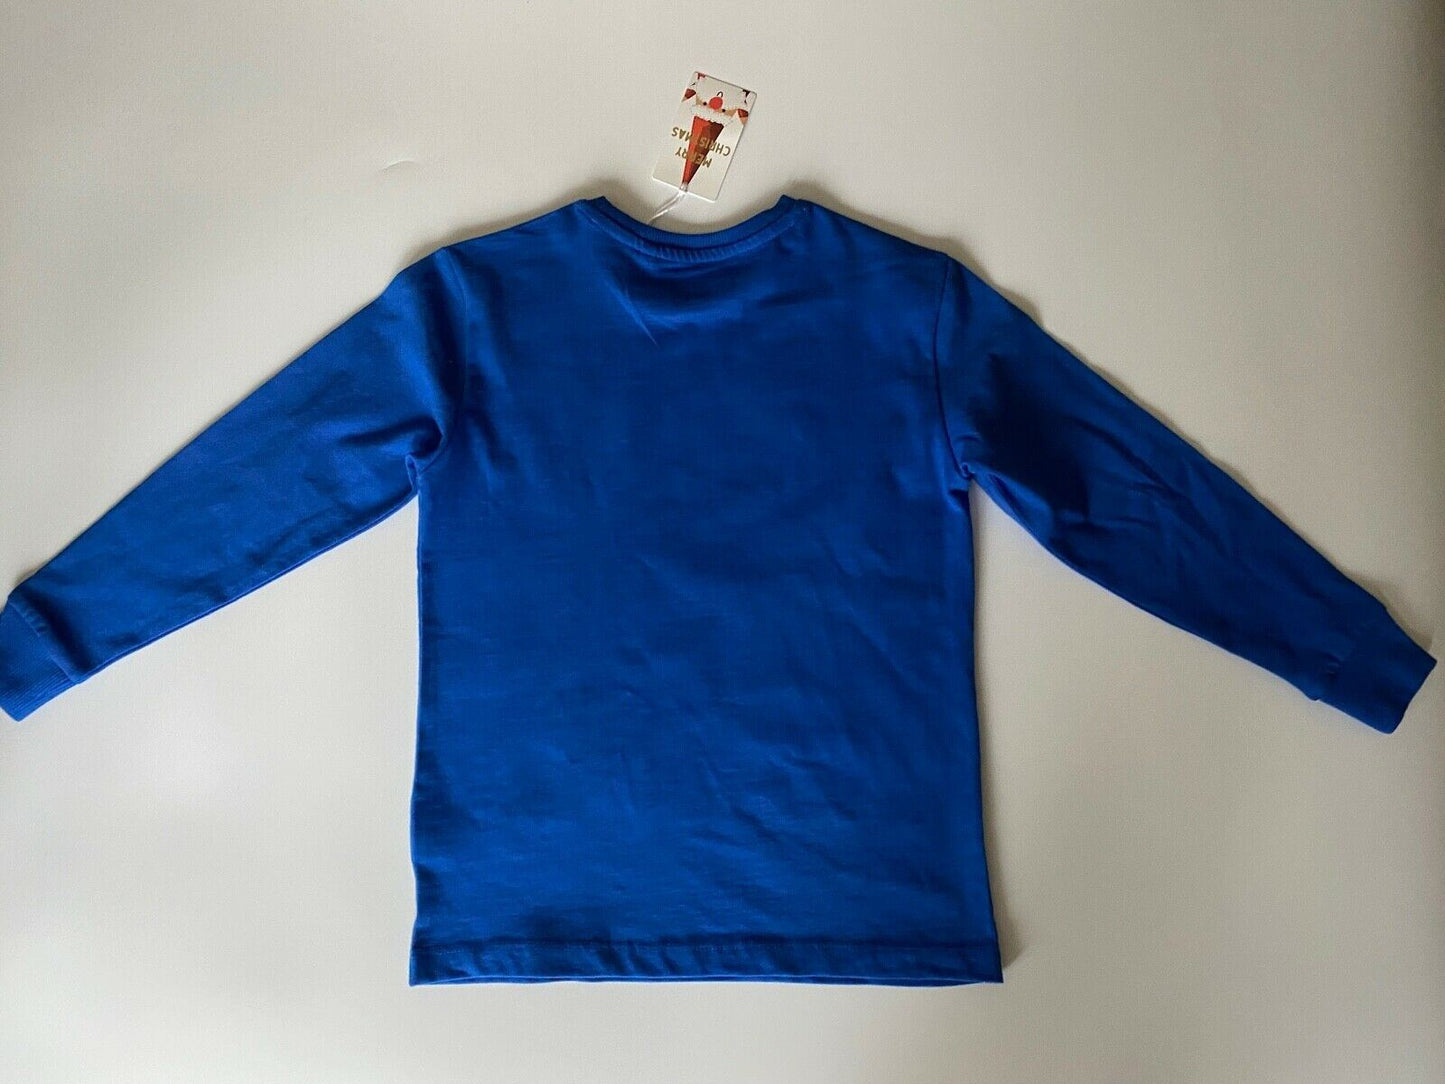 Boys Next Santa Claws Christmas T-Shirt Age 5 Years Blue Textured